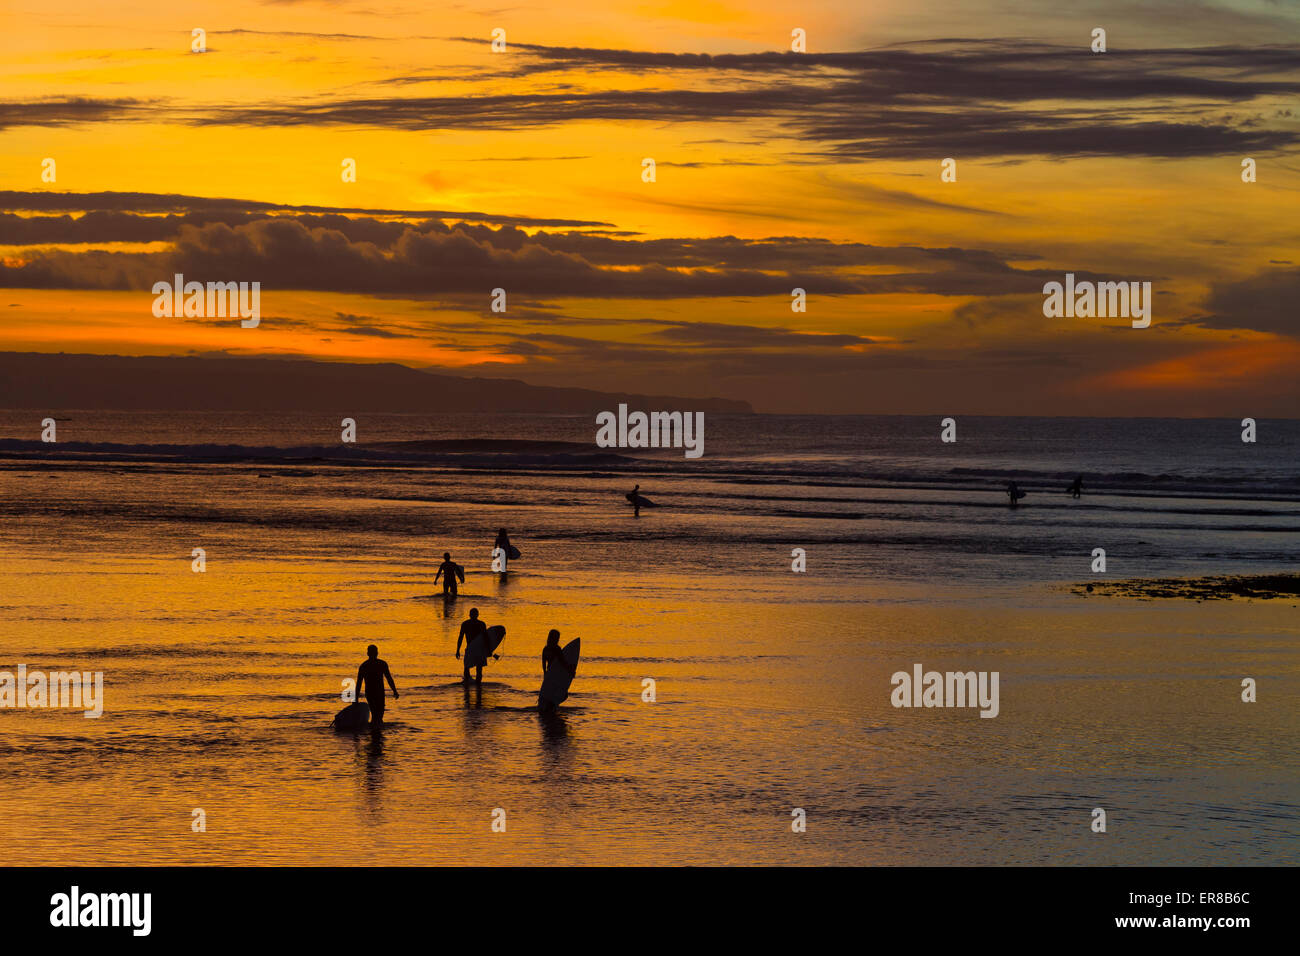 Surfers at sunrise. Bali. Indonesia. Stock Photo